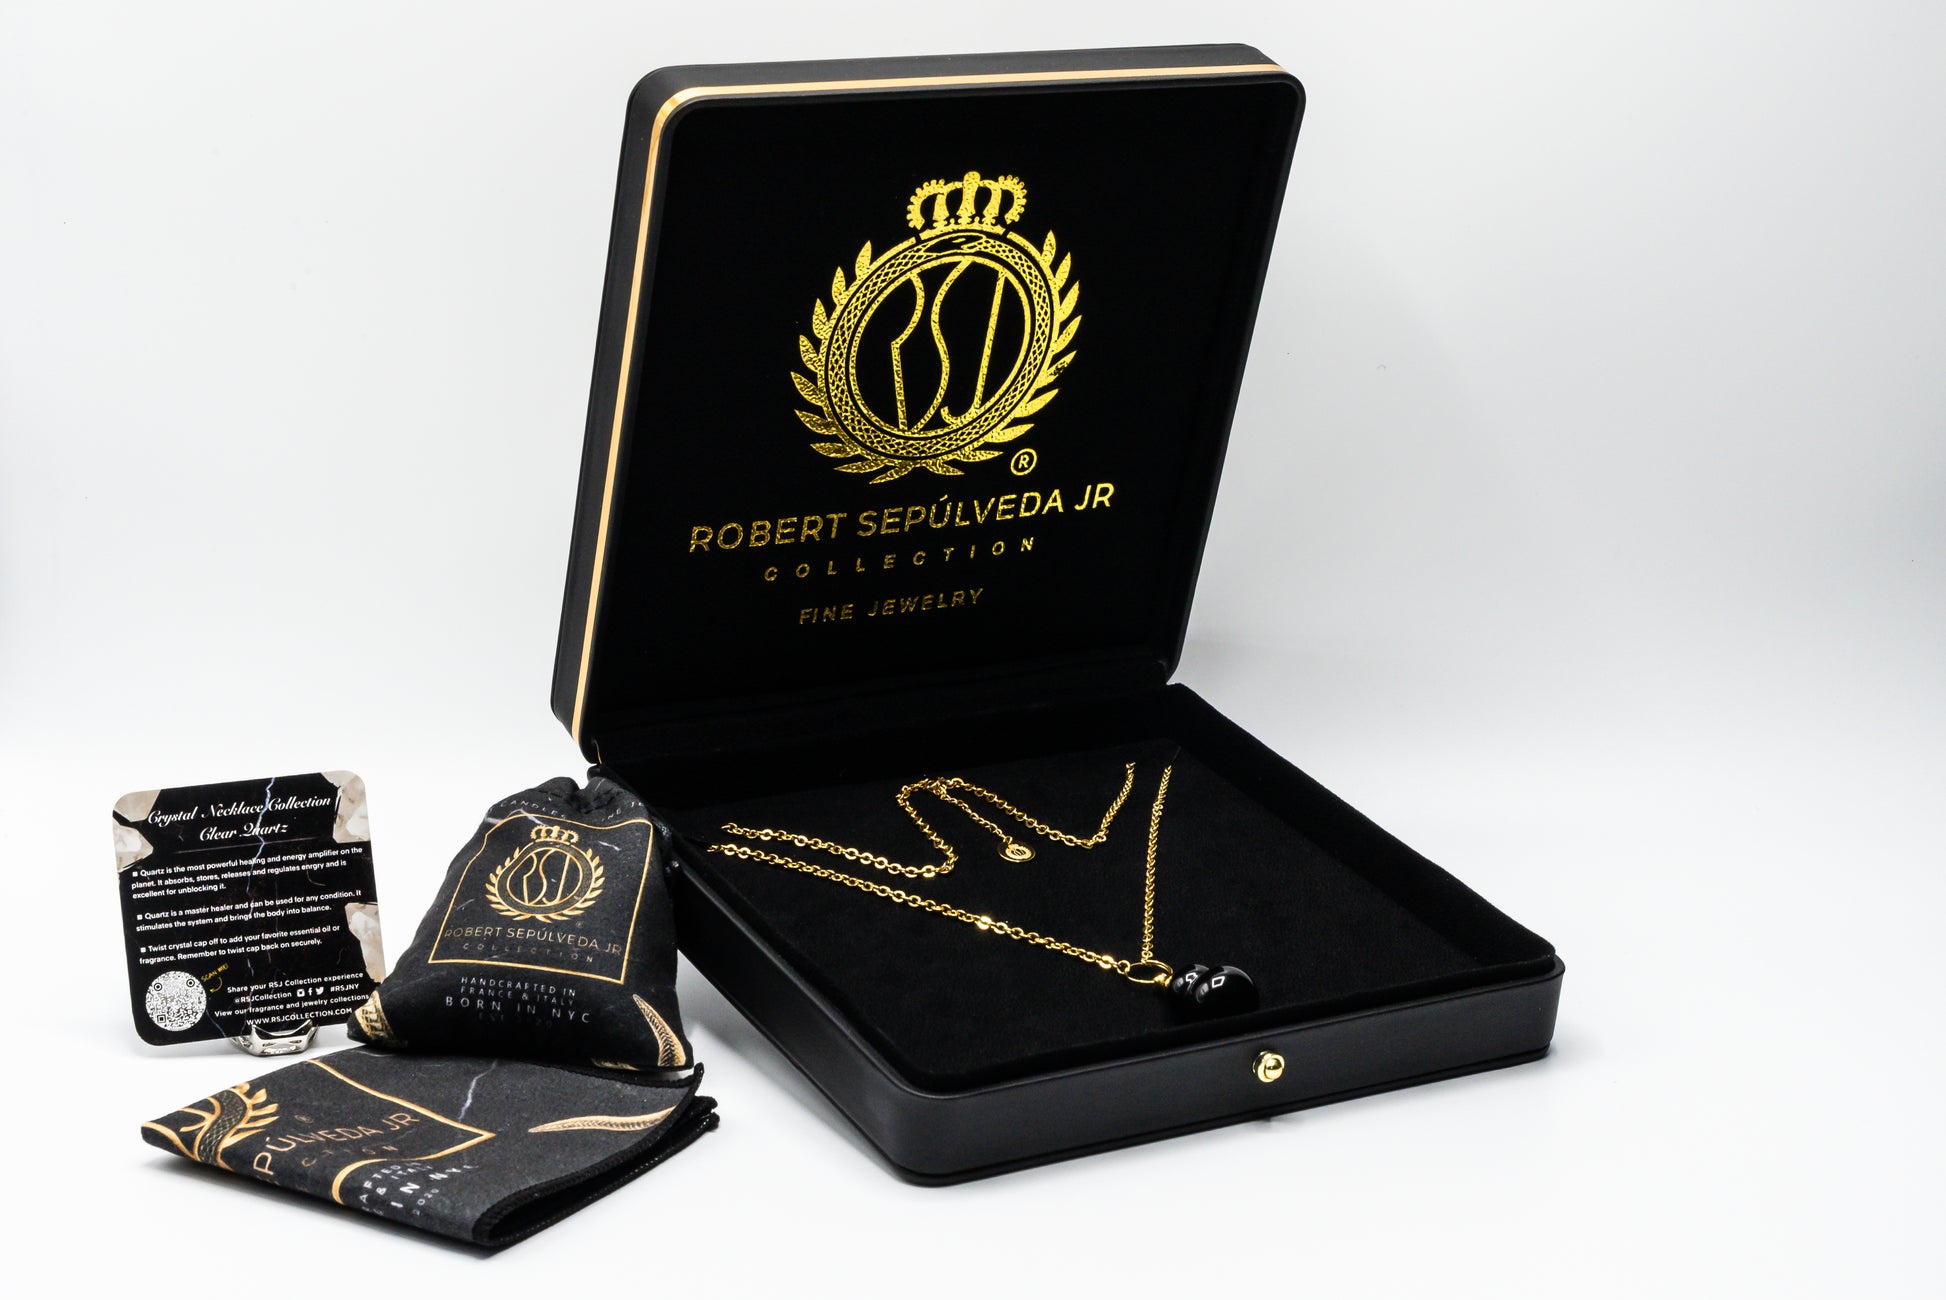 Onyx pendant in 18k gold vermeil-RSJ Collection LLC